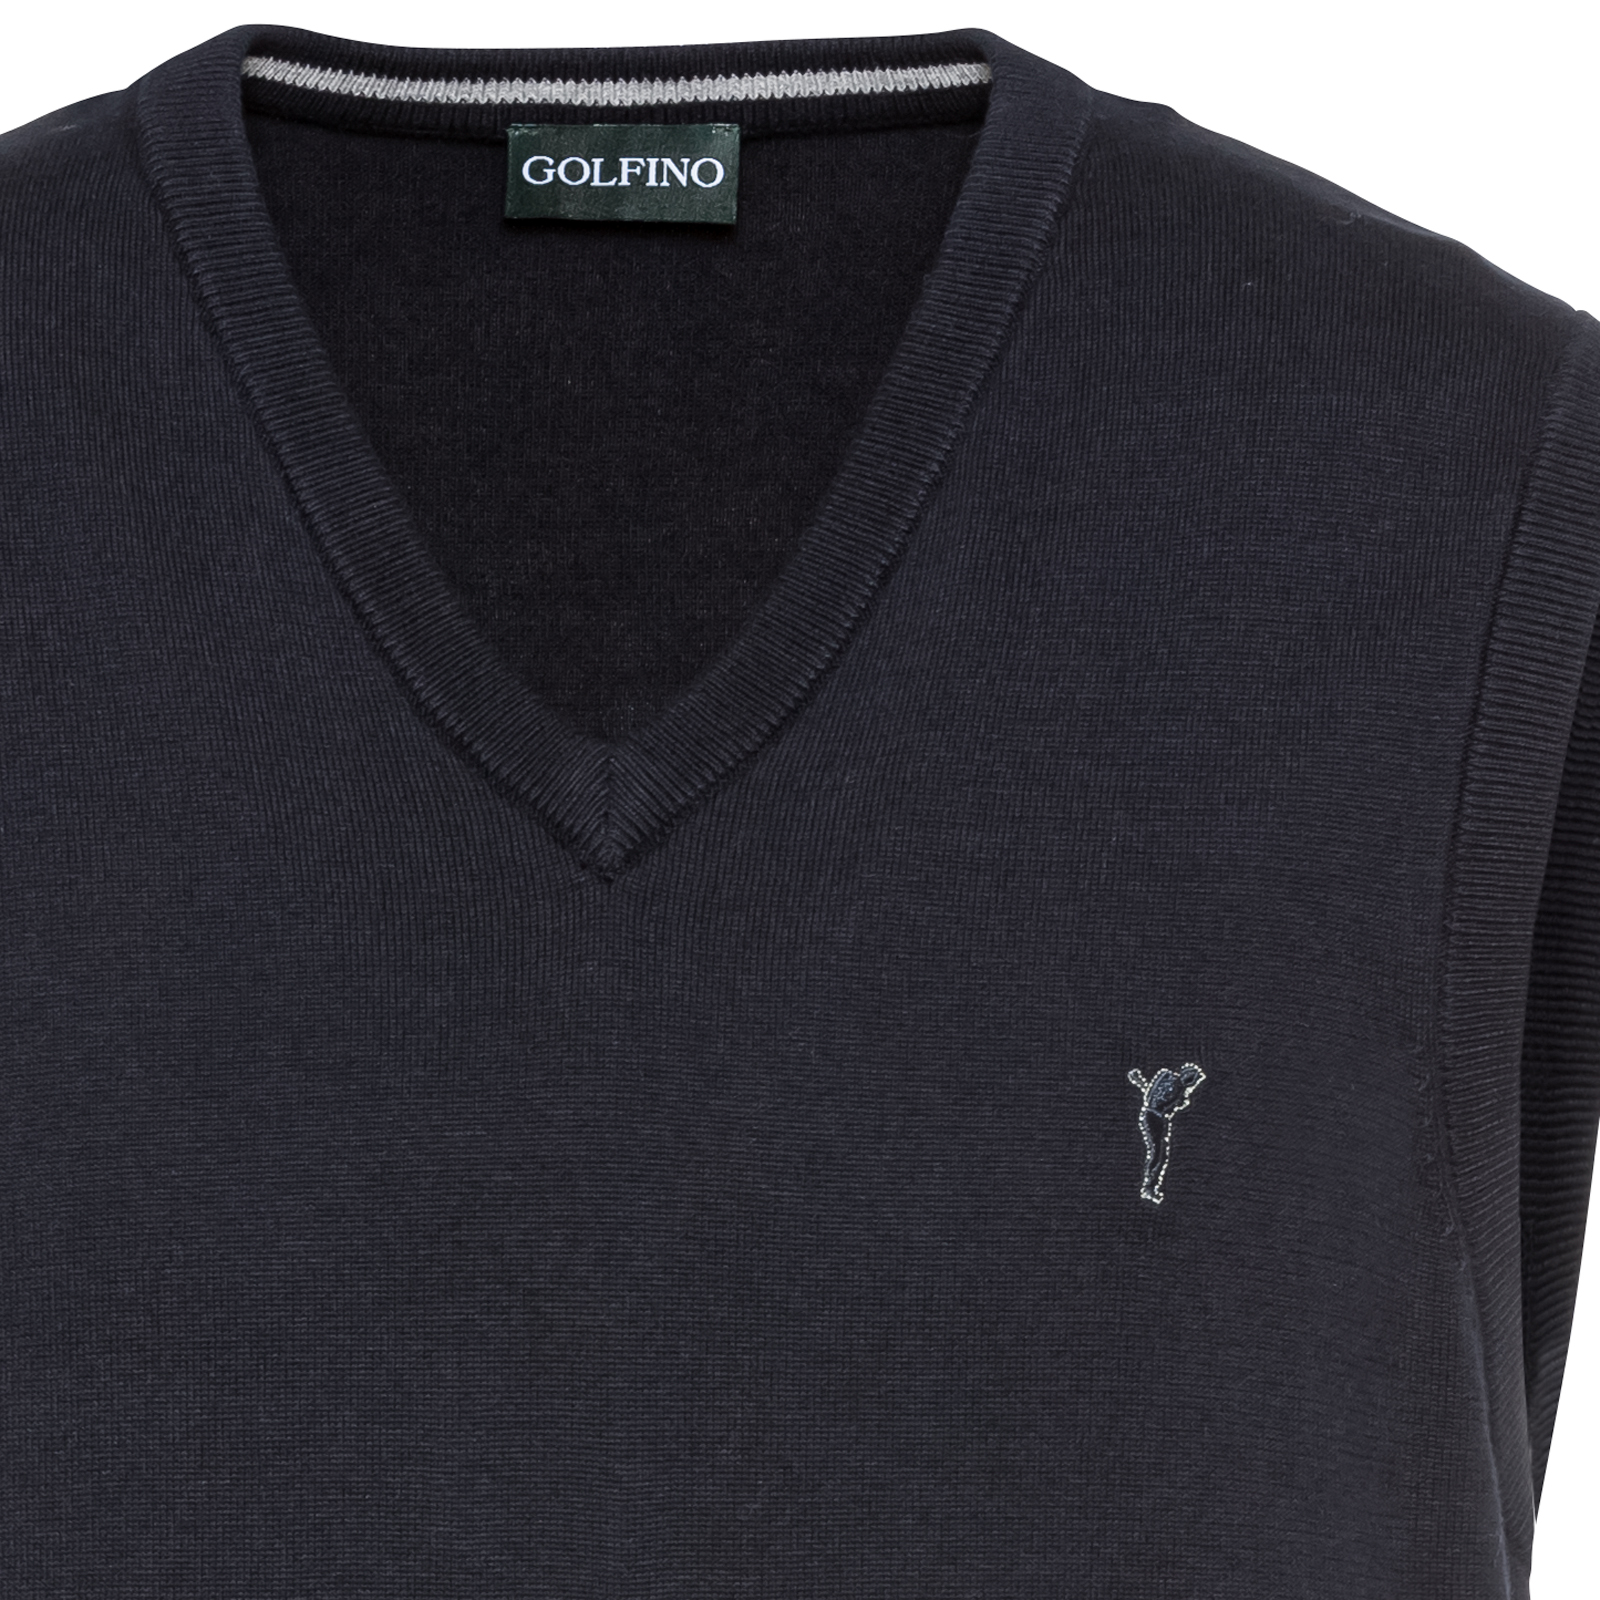 Sleeveless, soft cotton V-neck golf sweater